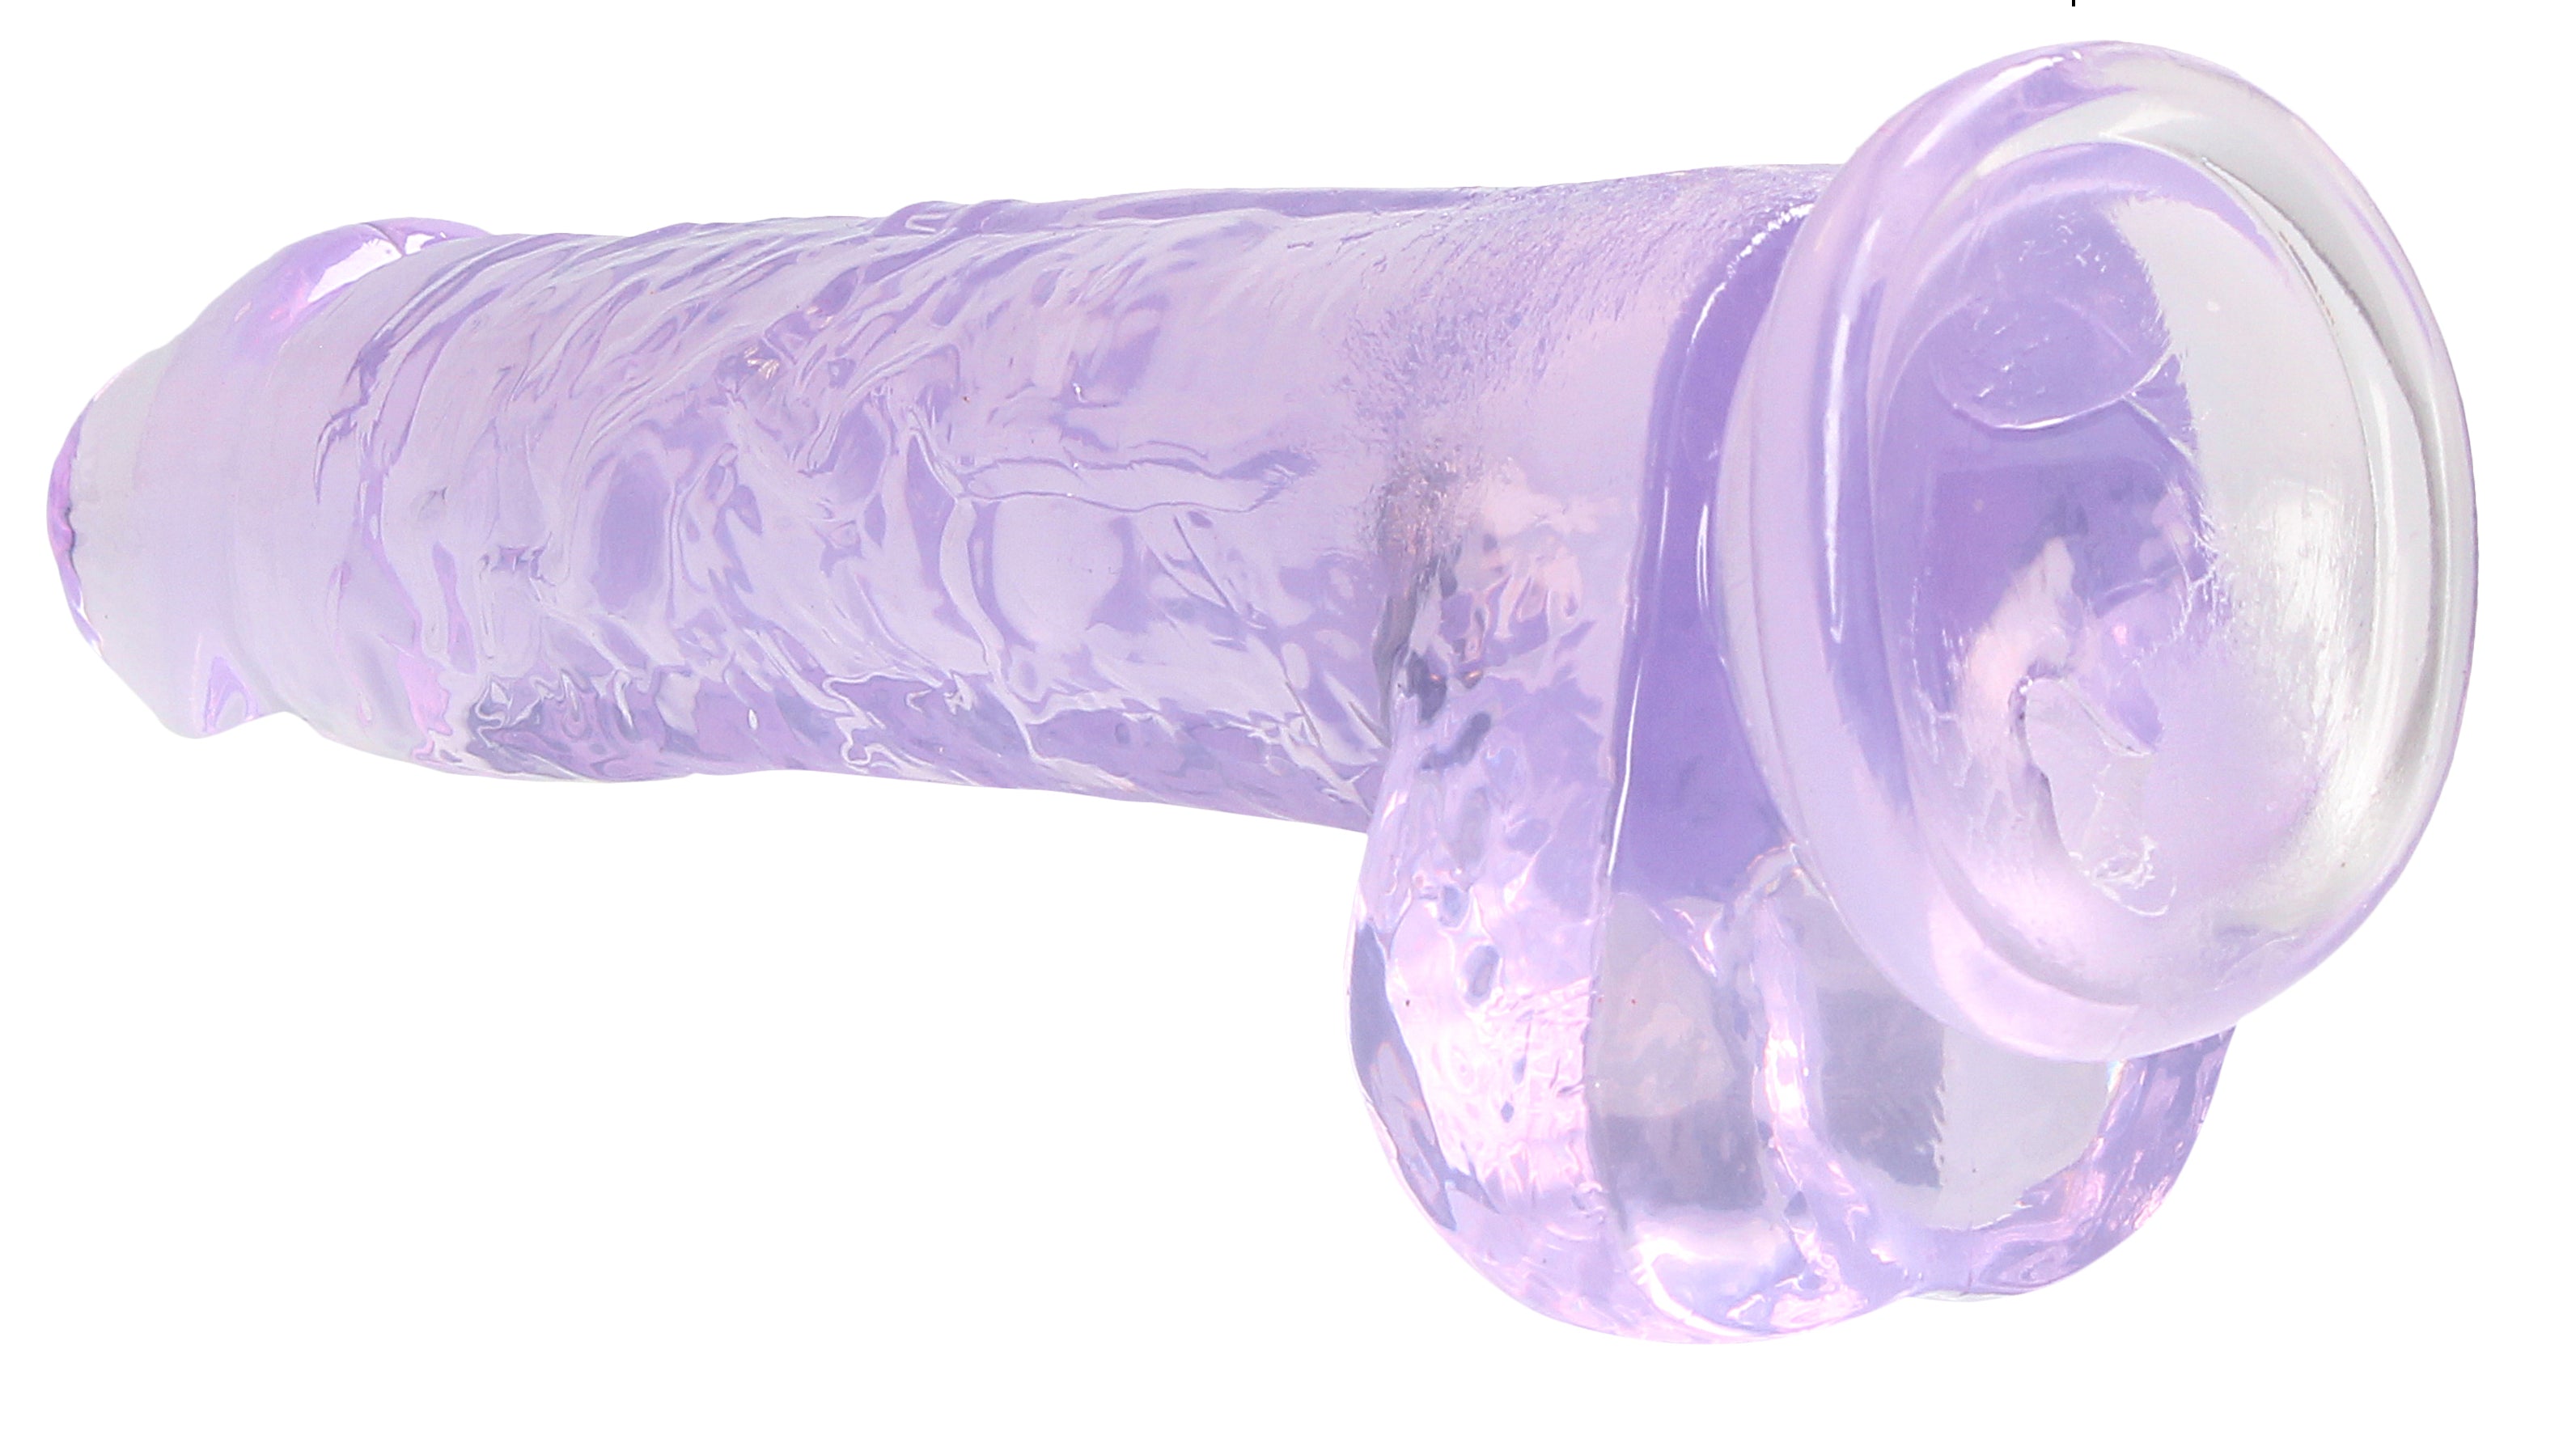 8 Inch Realistic Dildo With Balls - Purple